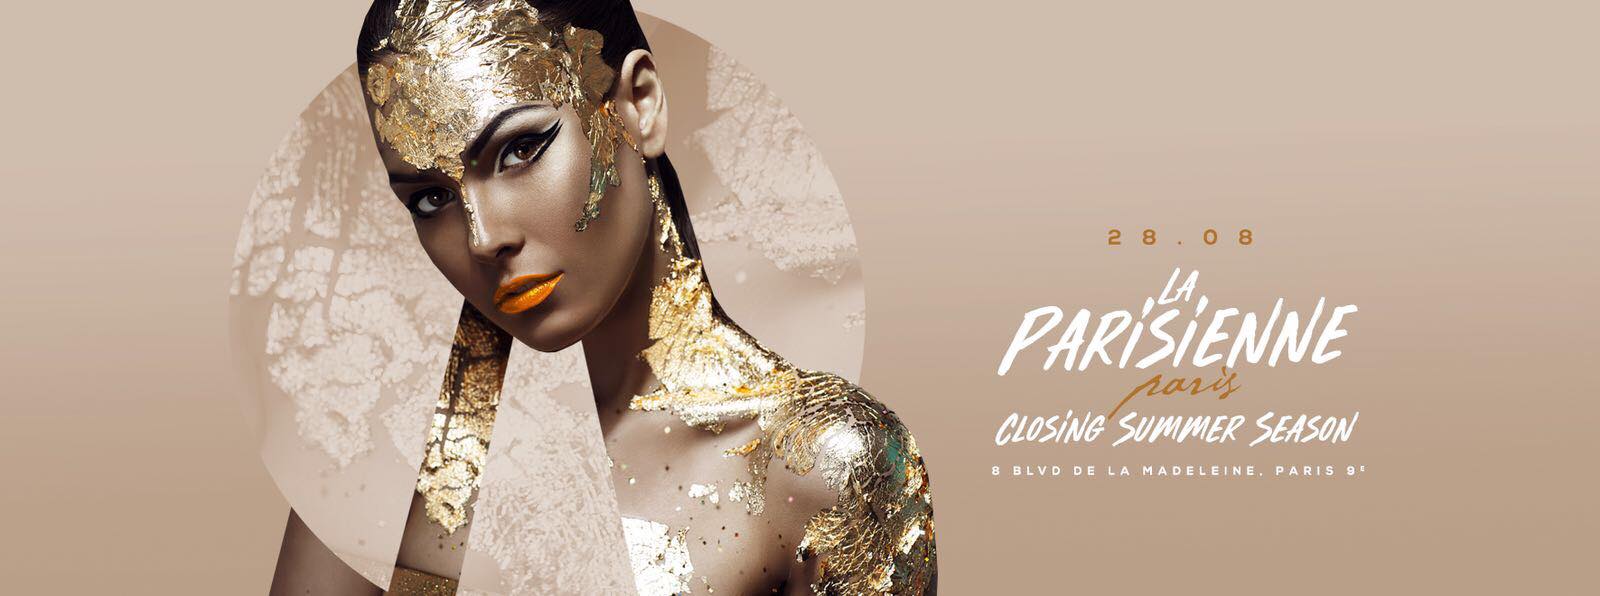 La Parisienne X Closing Summer Season